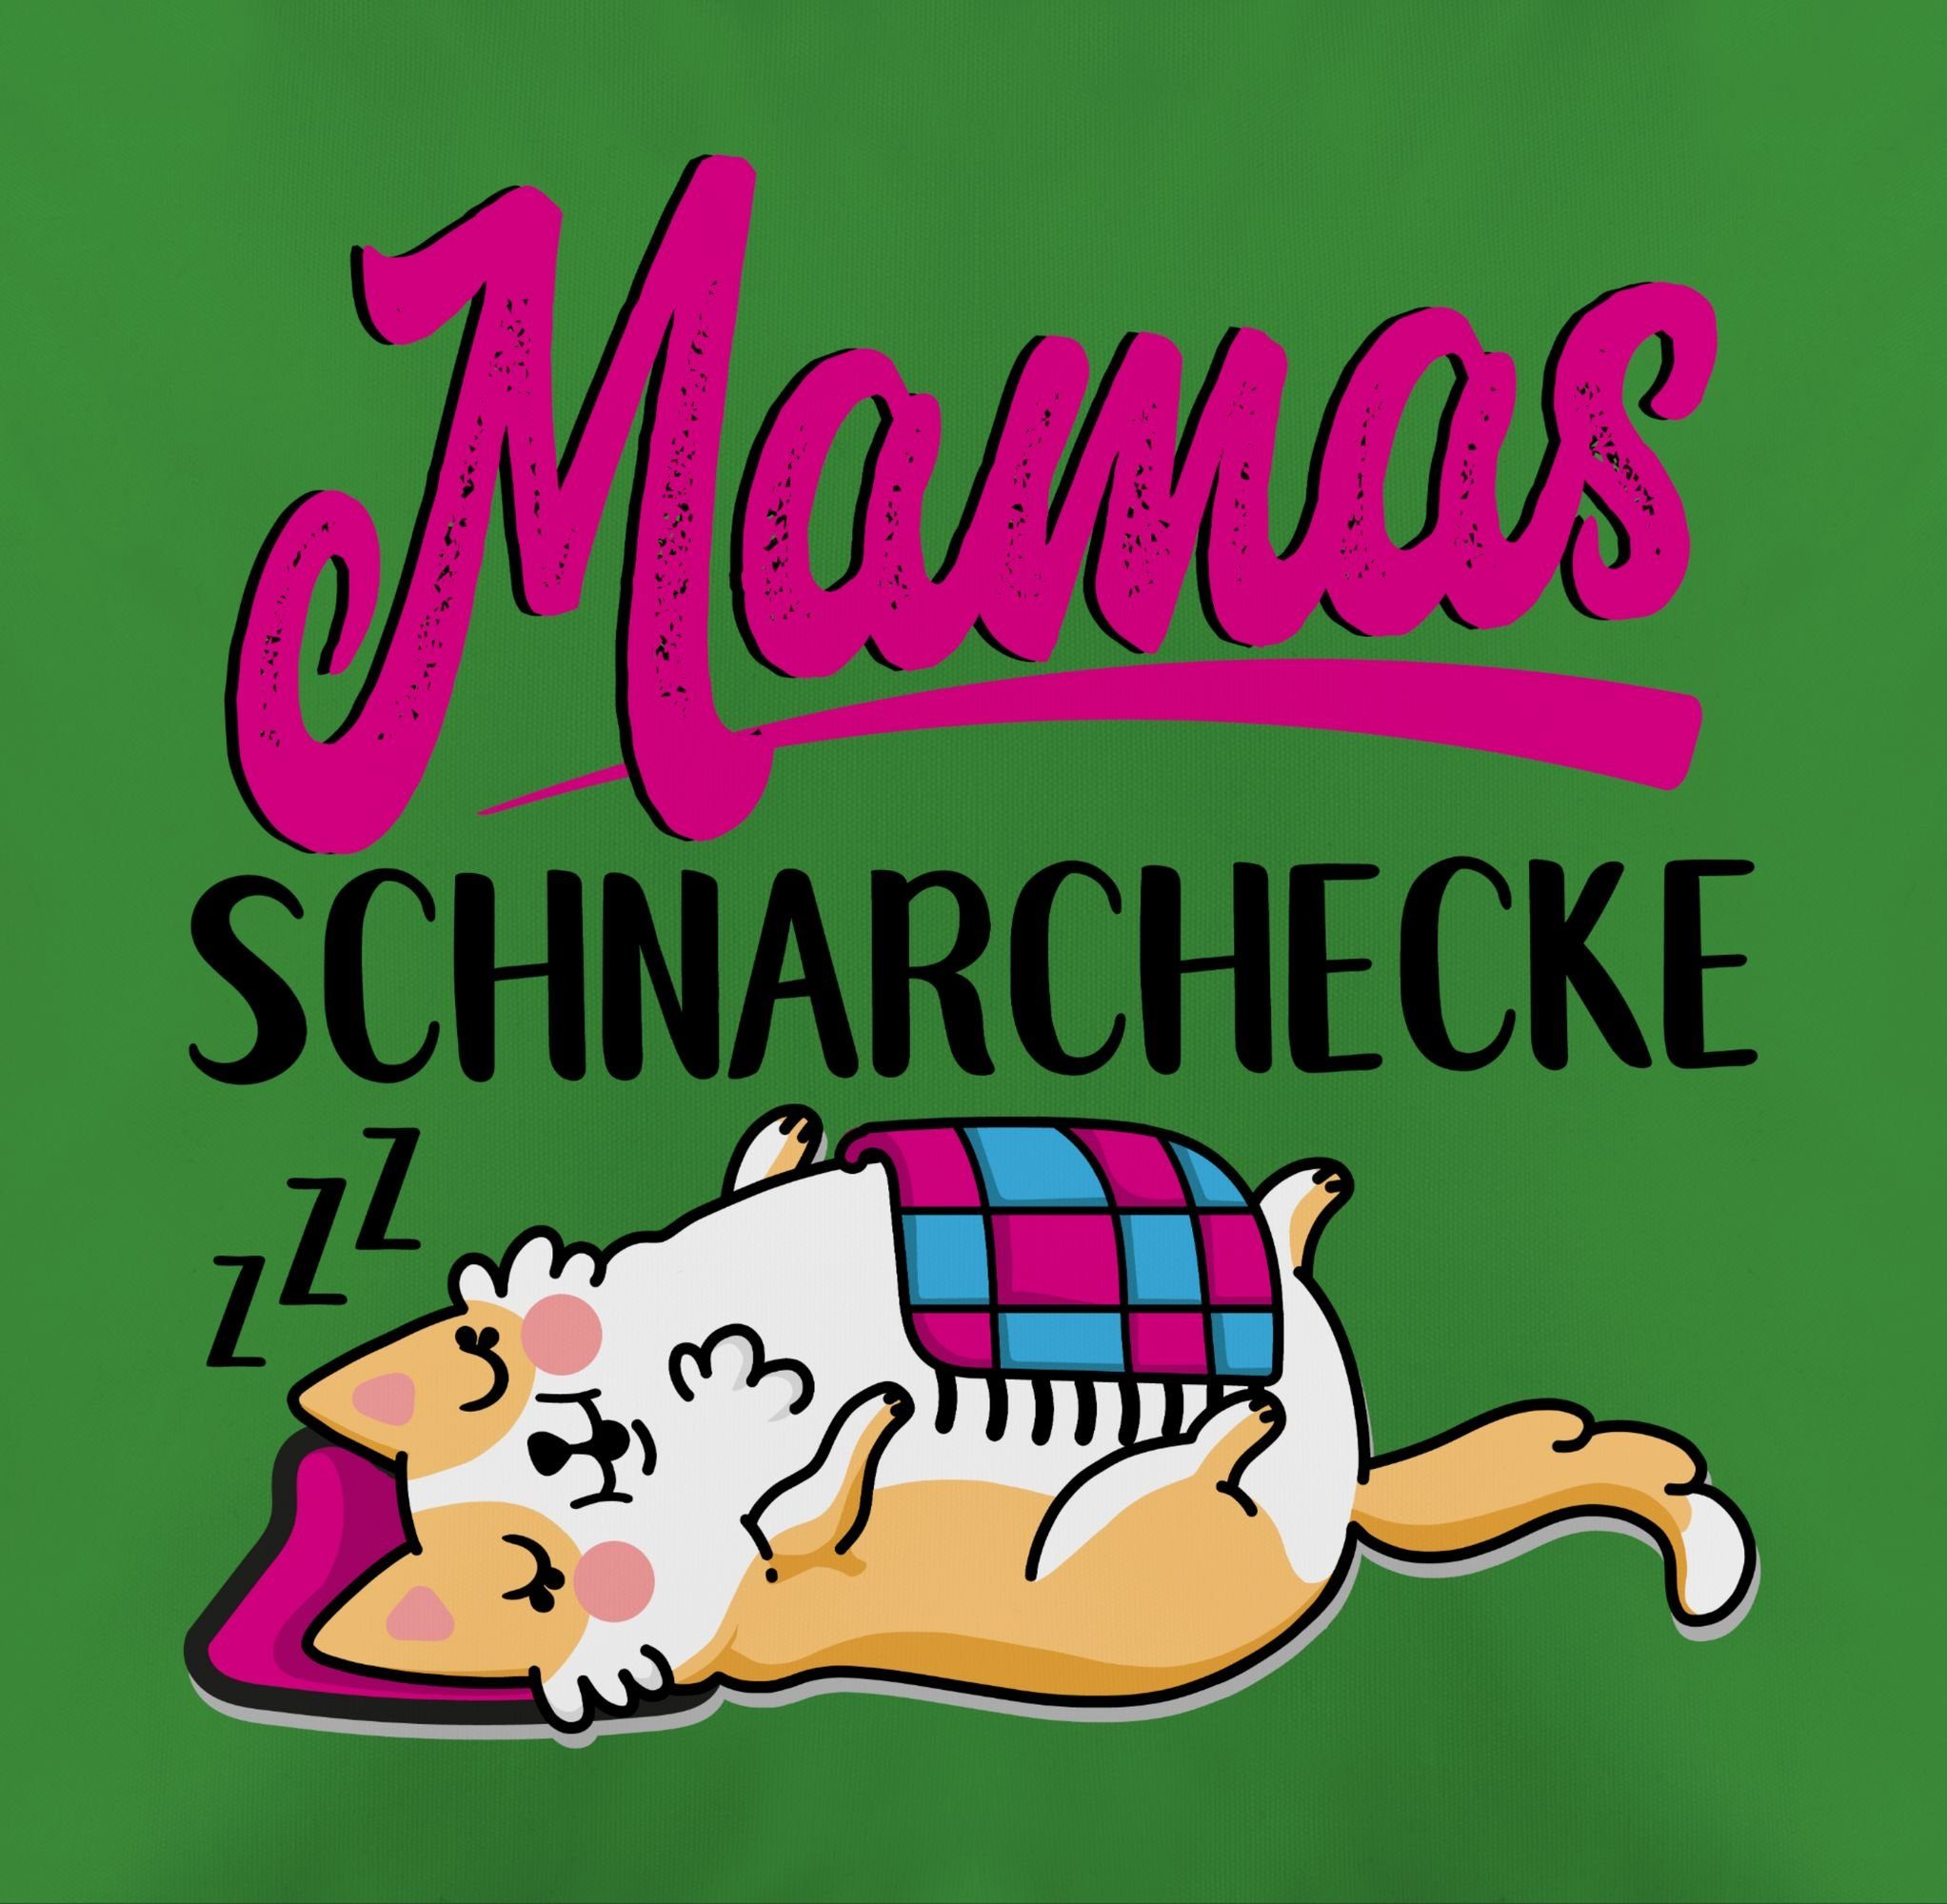 Grün - Dekokissen Shirtracer Muttertagsgeschenk 3 Mamas schwarz/fuchsia, Schnarchecke